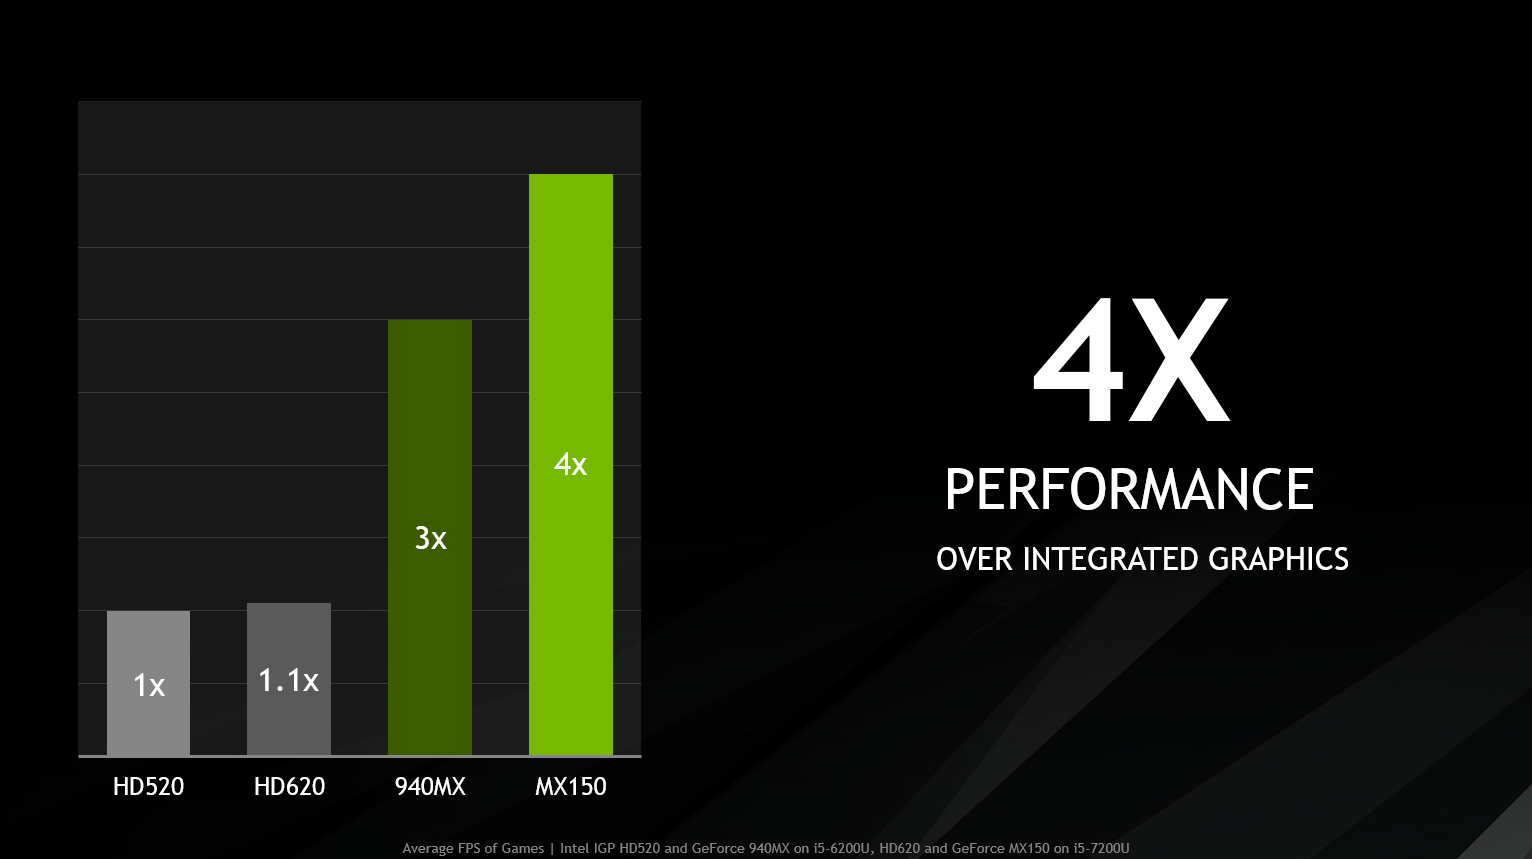 https://www.nvidia.com/content/dam/en-zz/Solutions/geforce/news/nvidia-geforce-mx150-laptops/nvidia-geforce-mx150-4x-game-performance.png